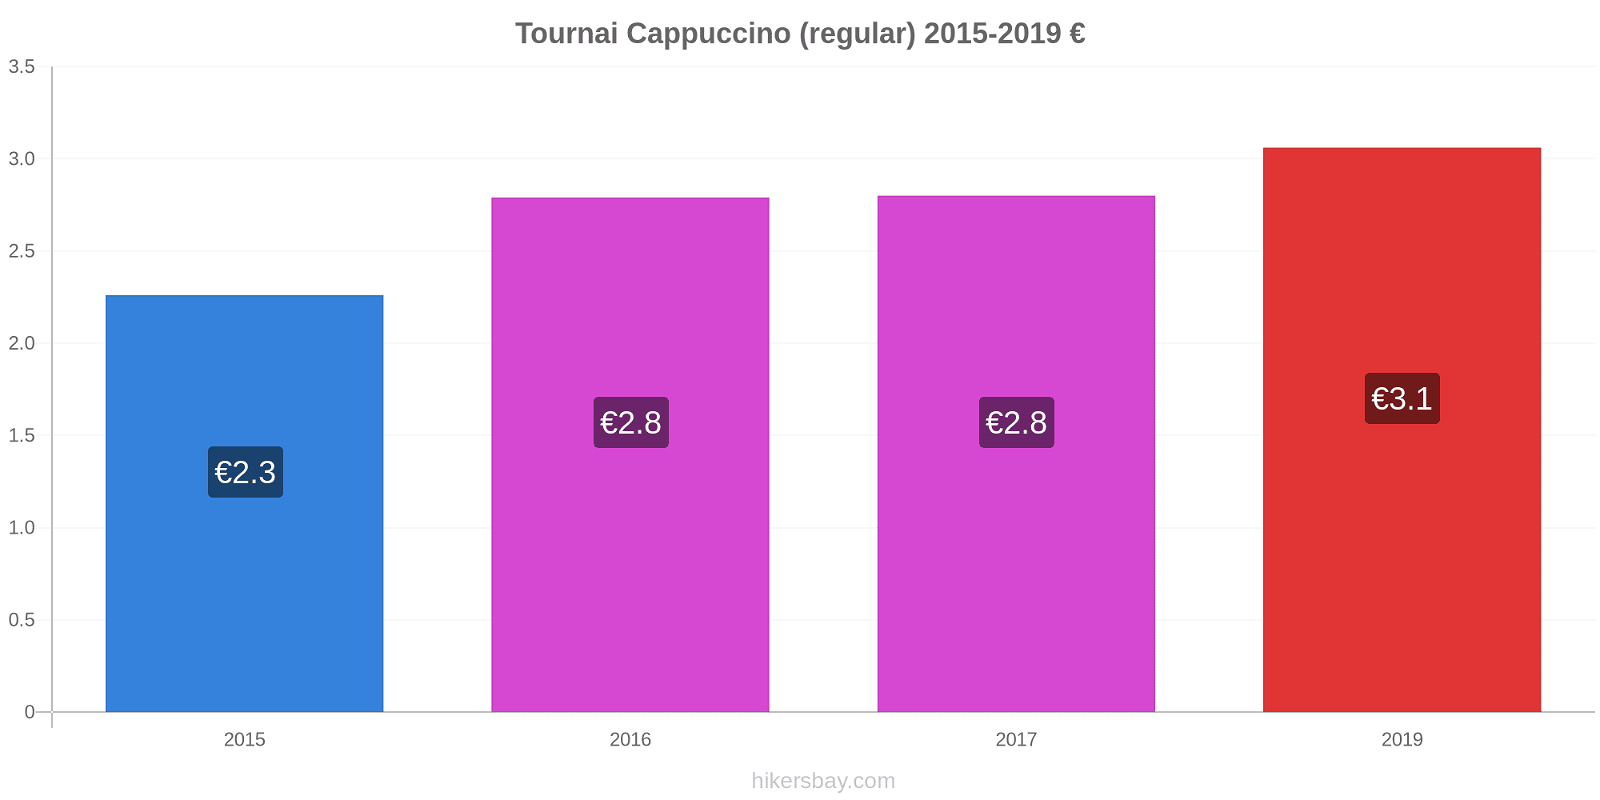 Tournai price changes Cappuccino (regular) hikersbay.com